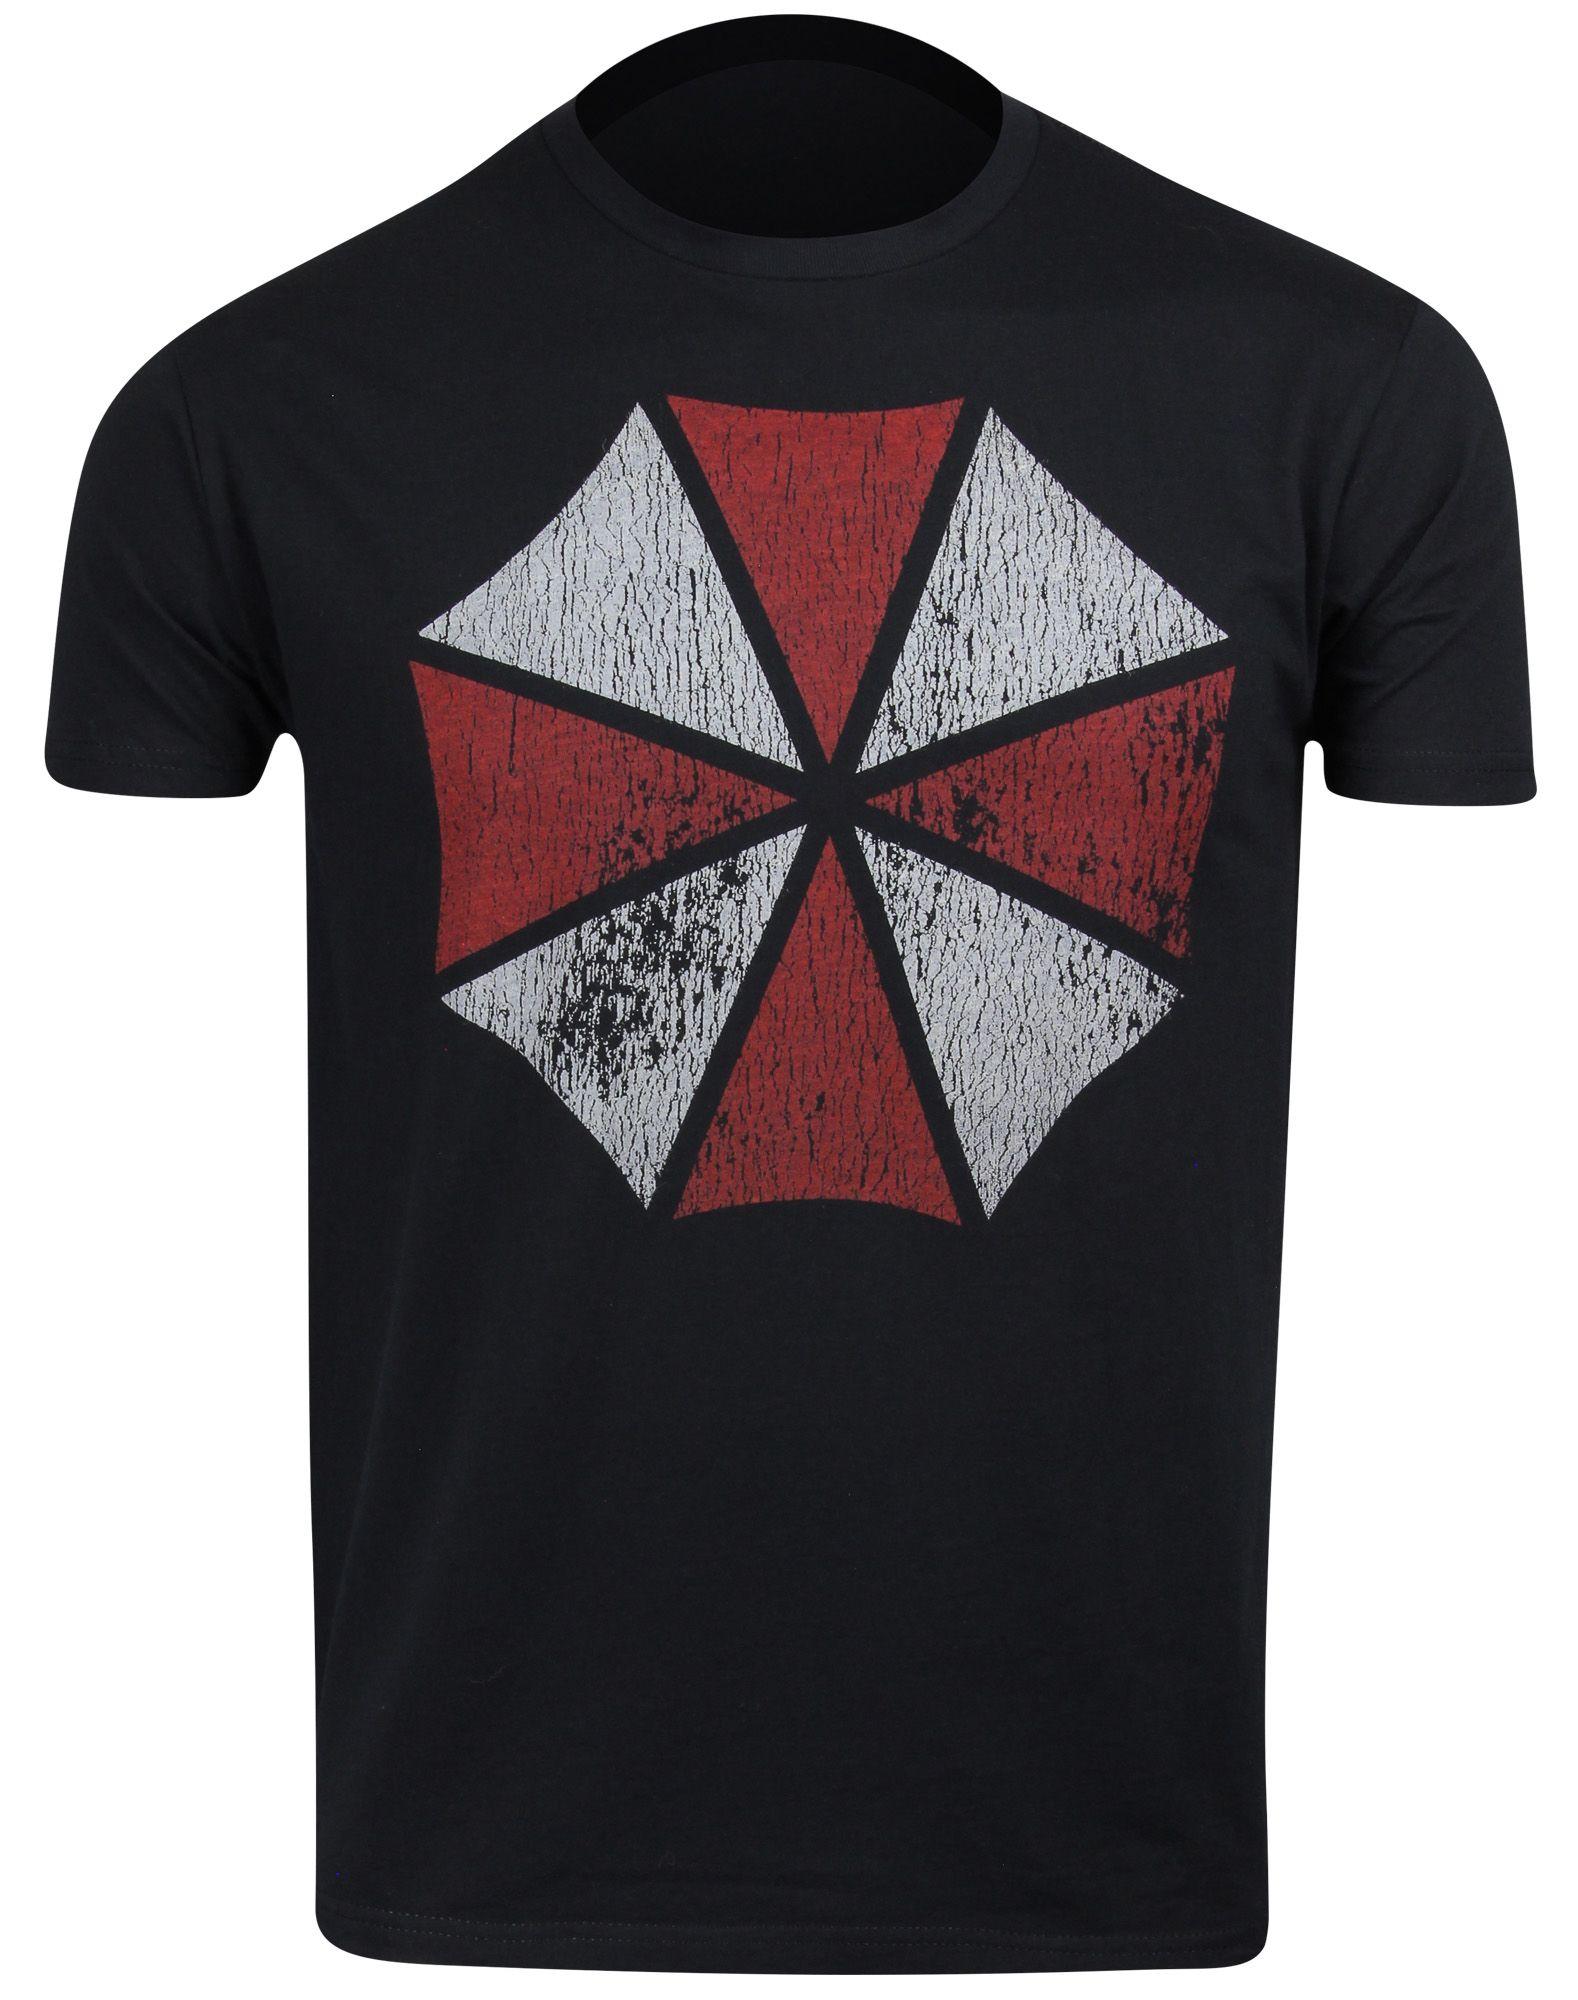 Re Umbrella Logo - Capcom Resident Evil Umbrella Logo T Shirt (Black)